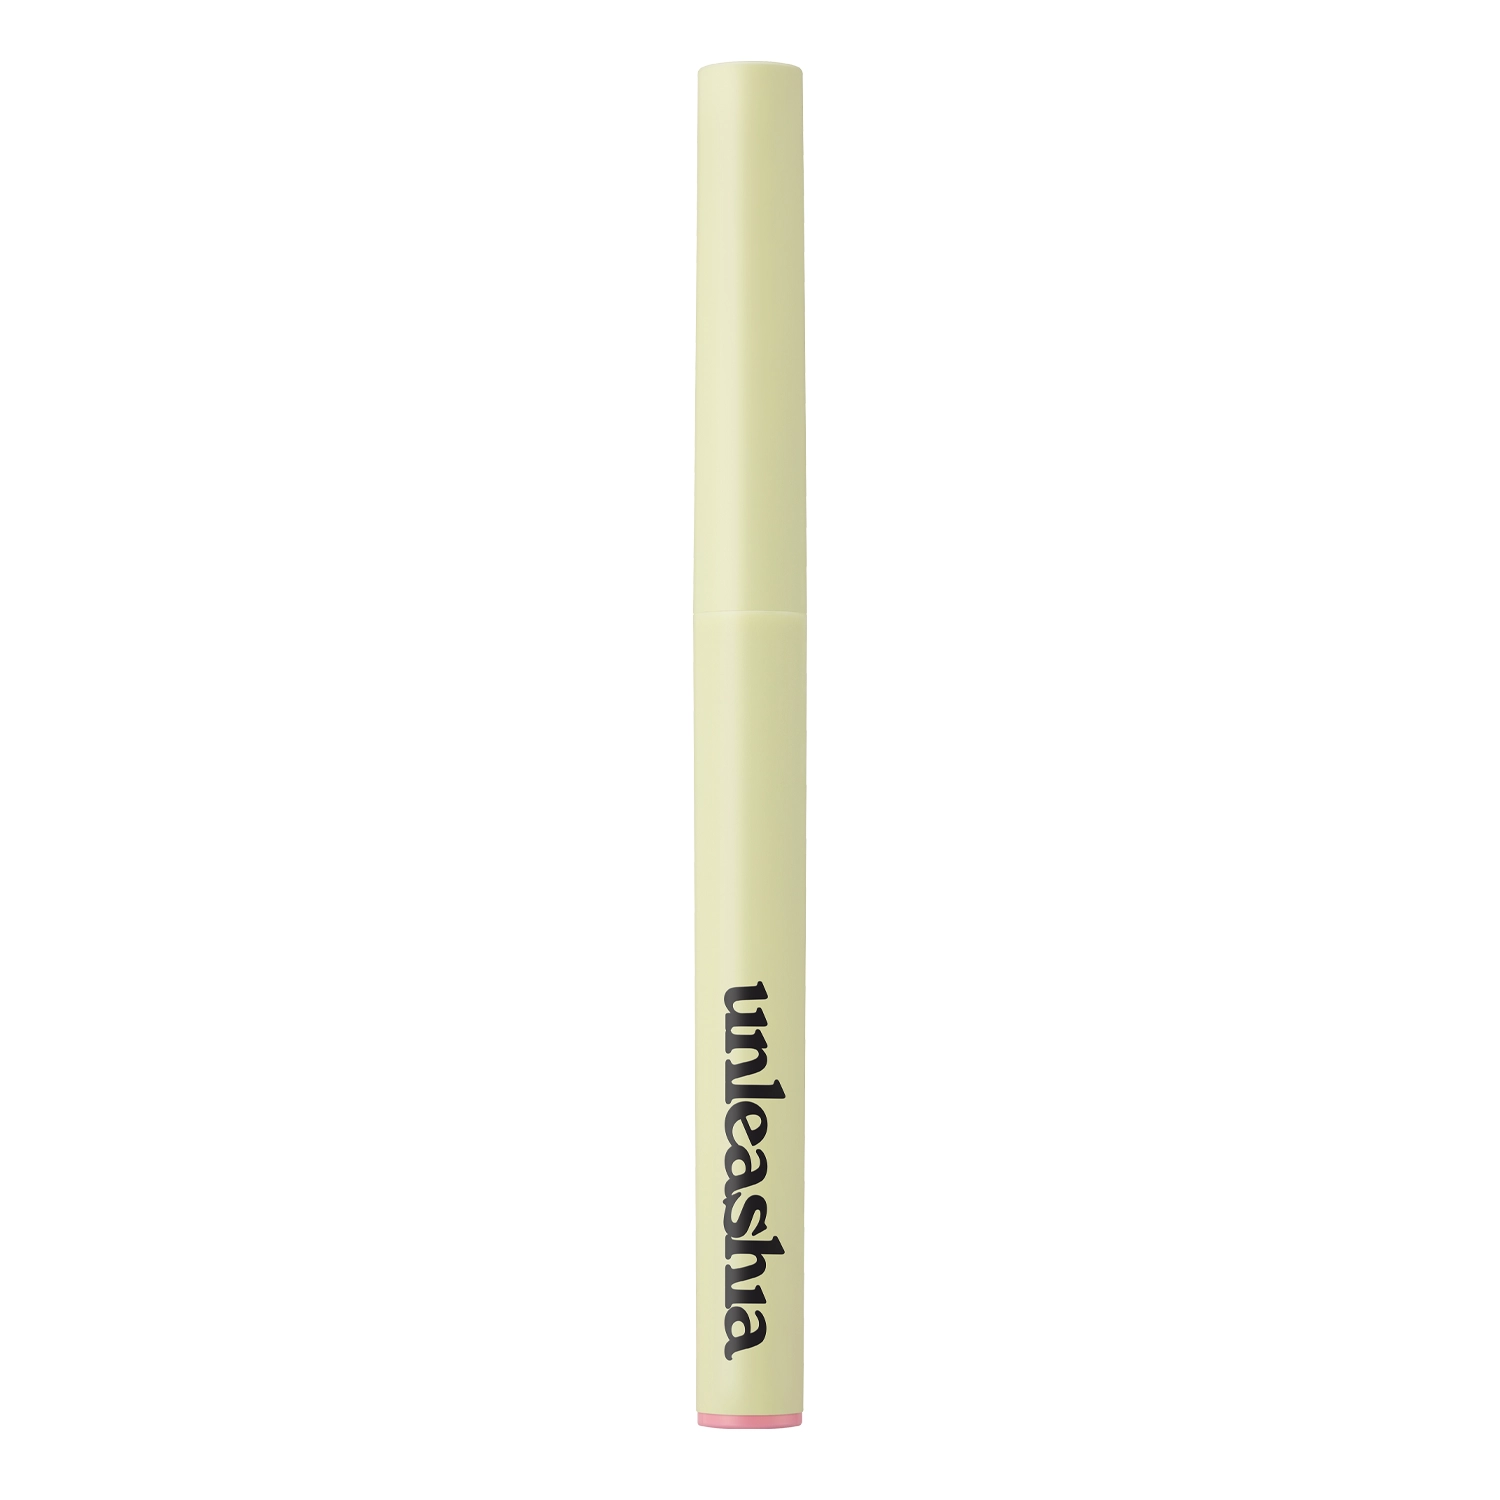 Unleashia - Oh! Happy Day Lip Pencil - Creion de buze - No. 3 Strawberry Cake - 0.7g